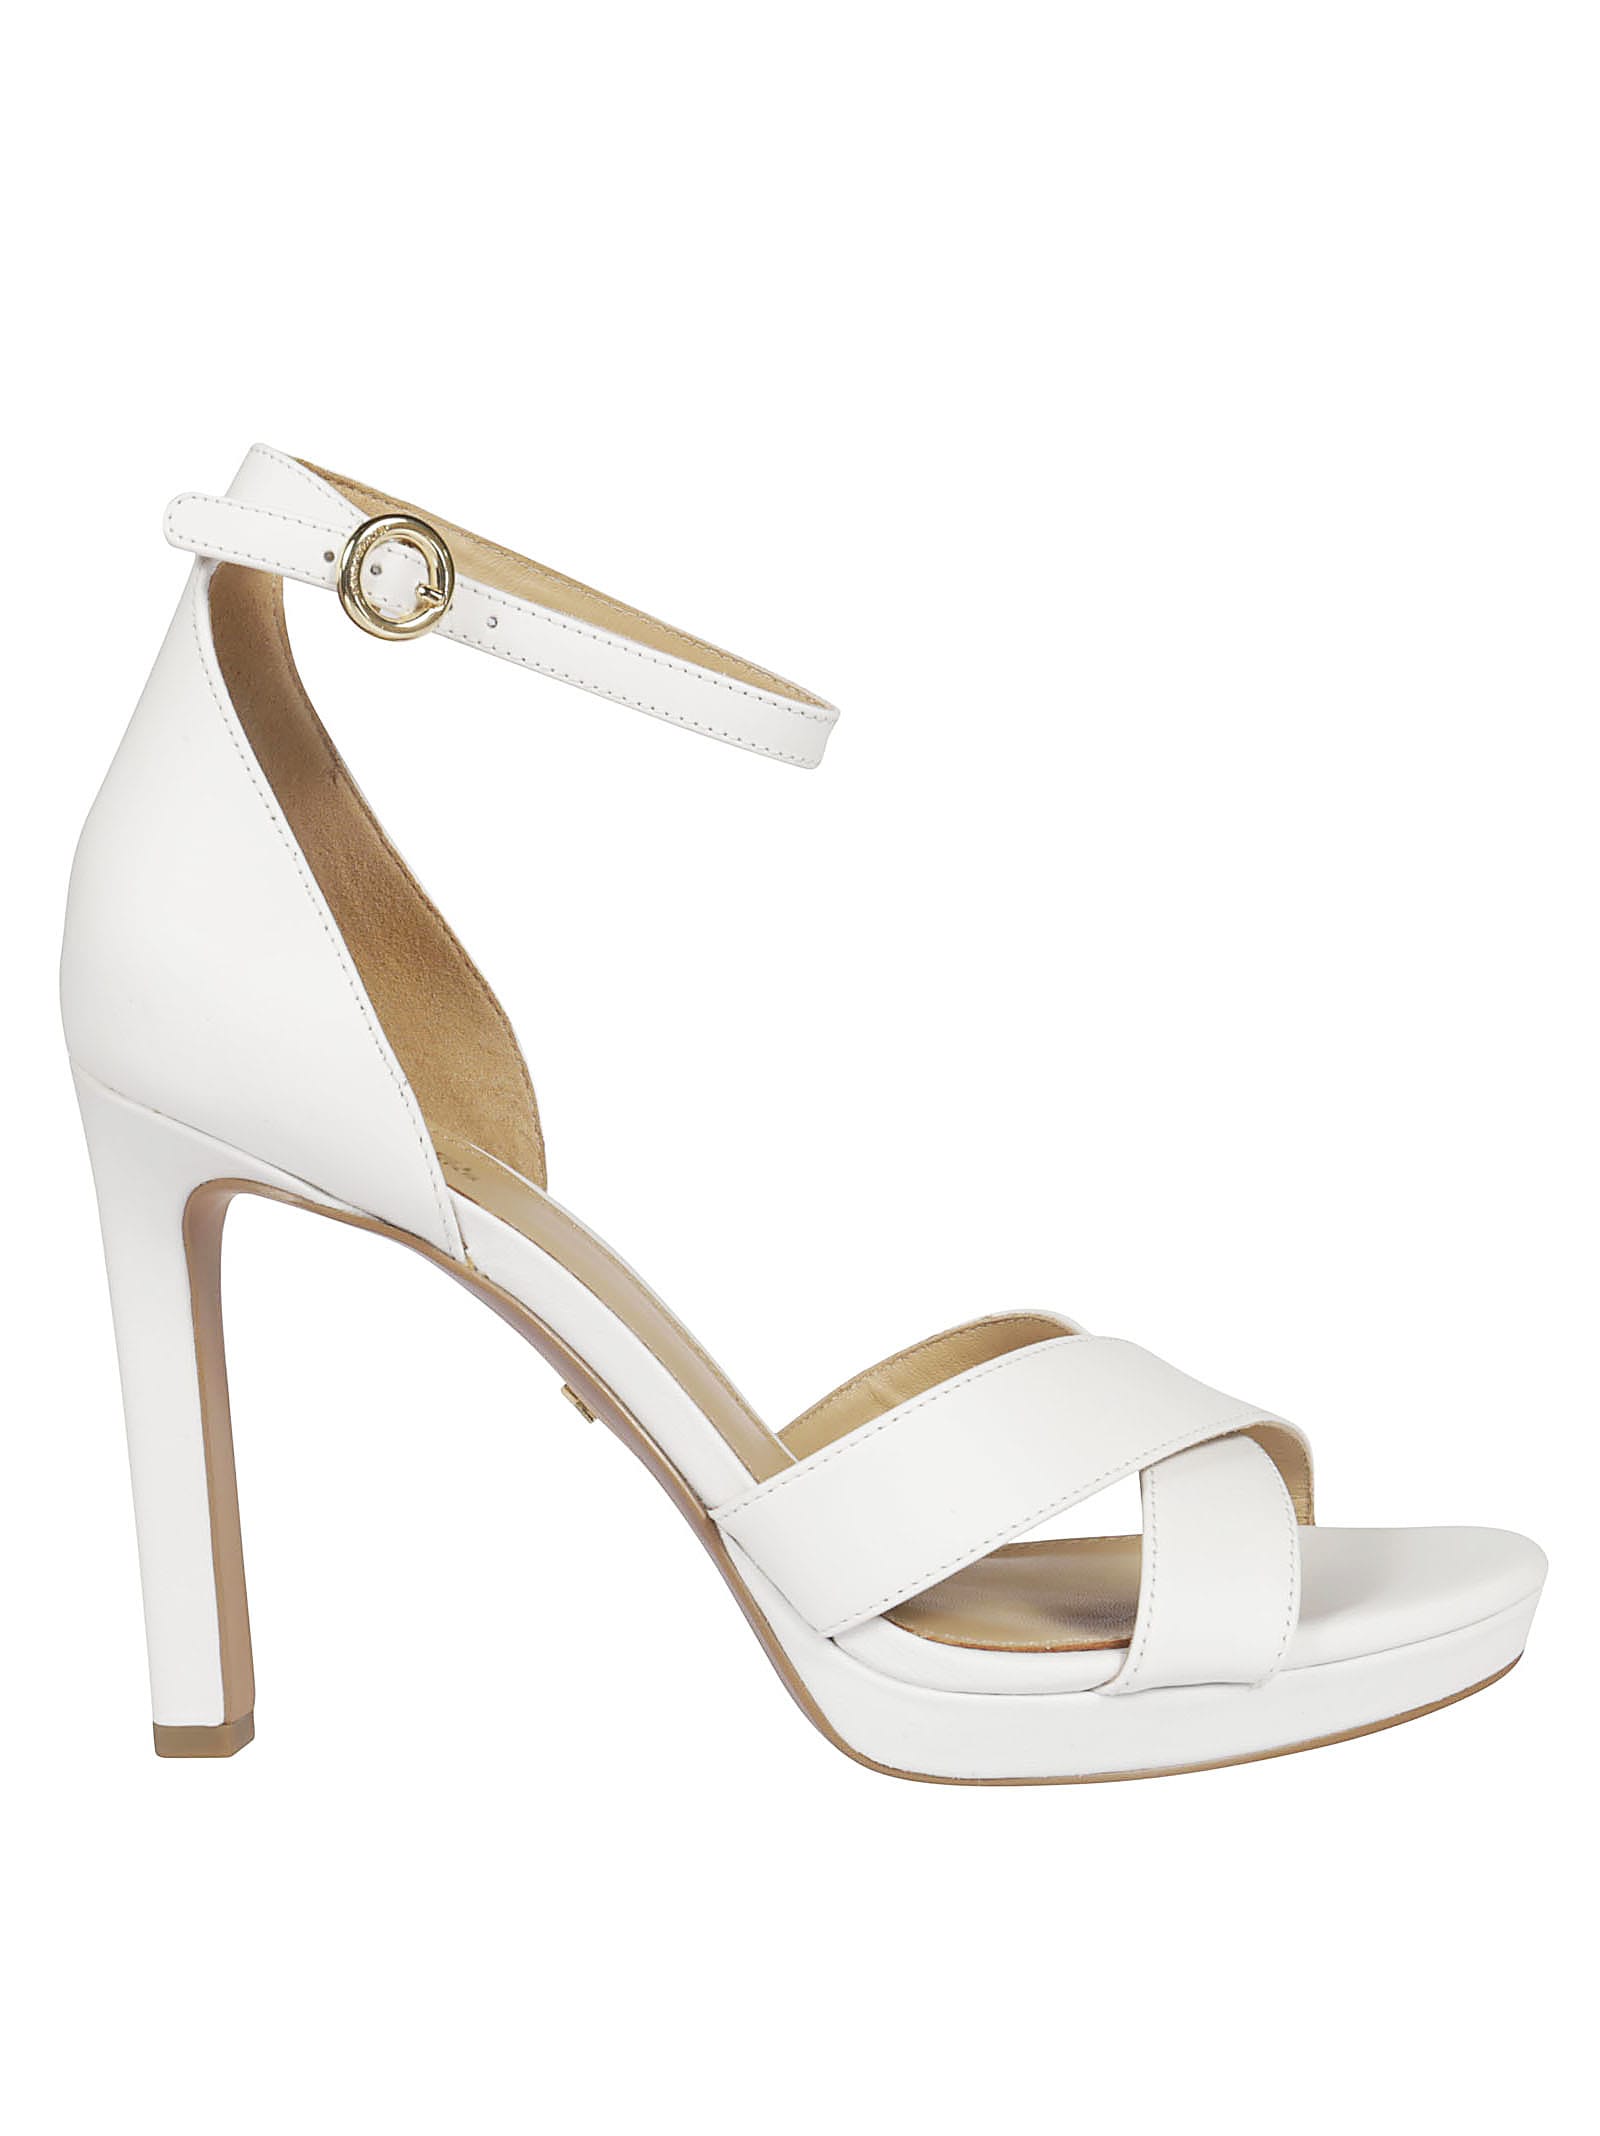 michael kors white high heels